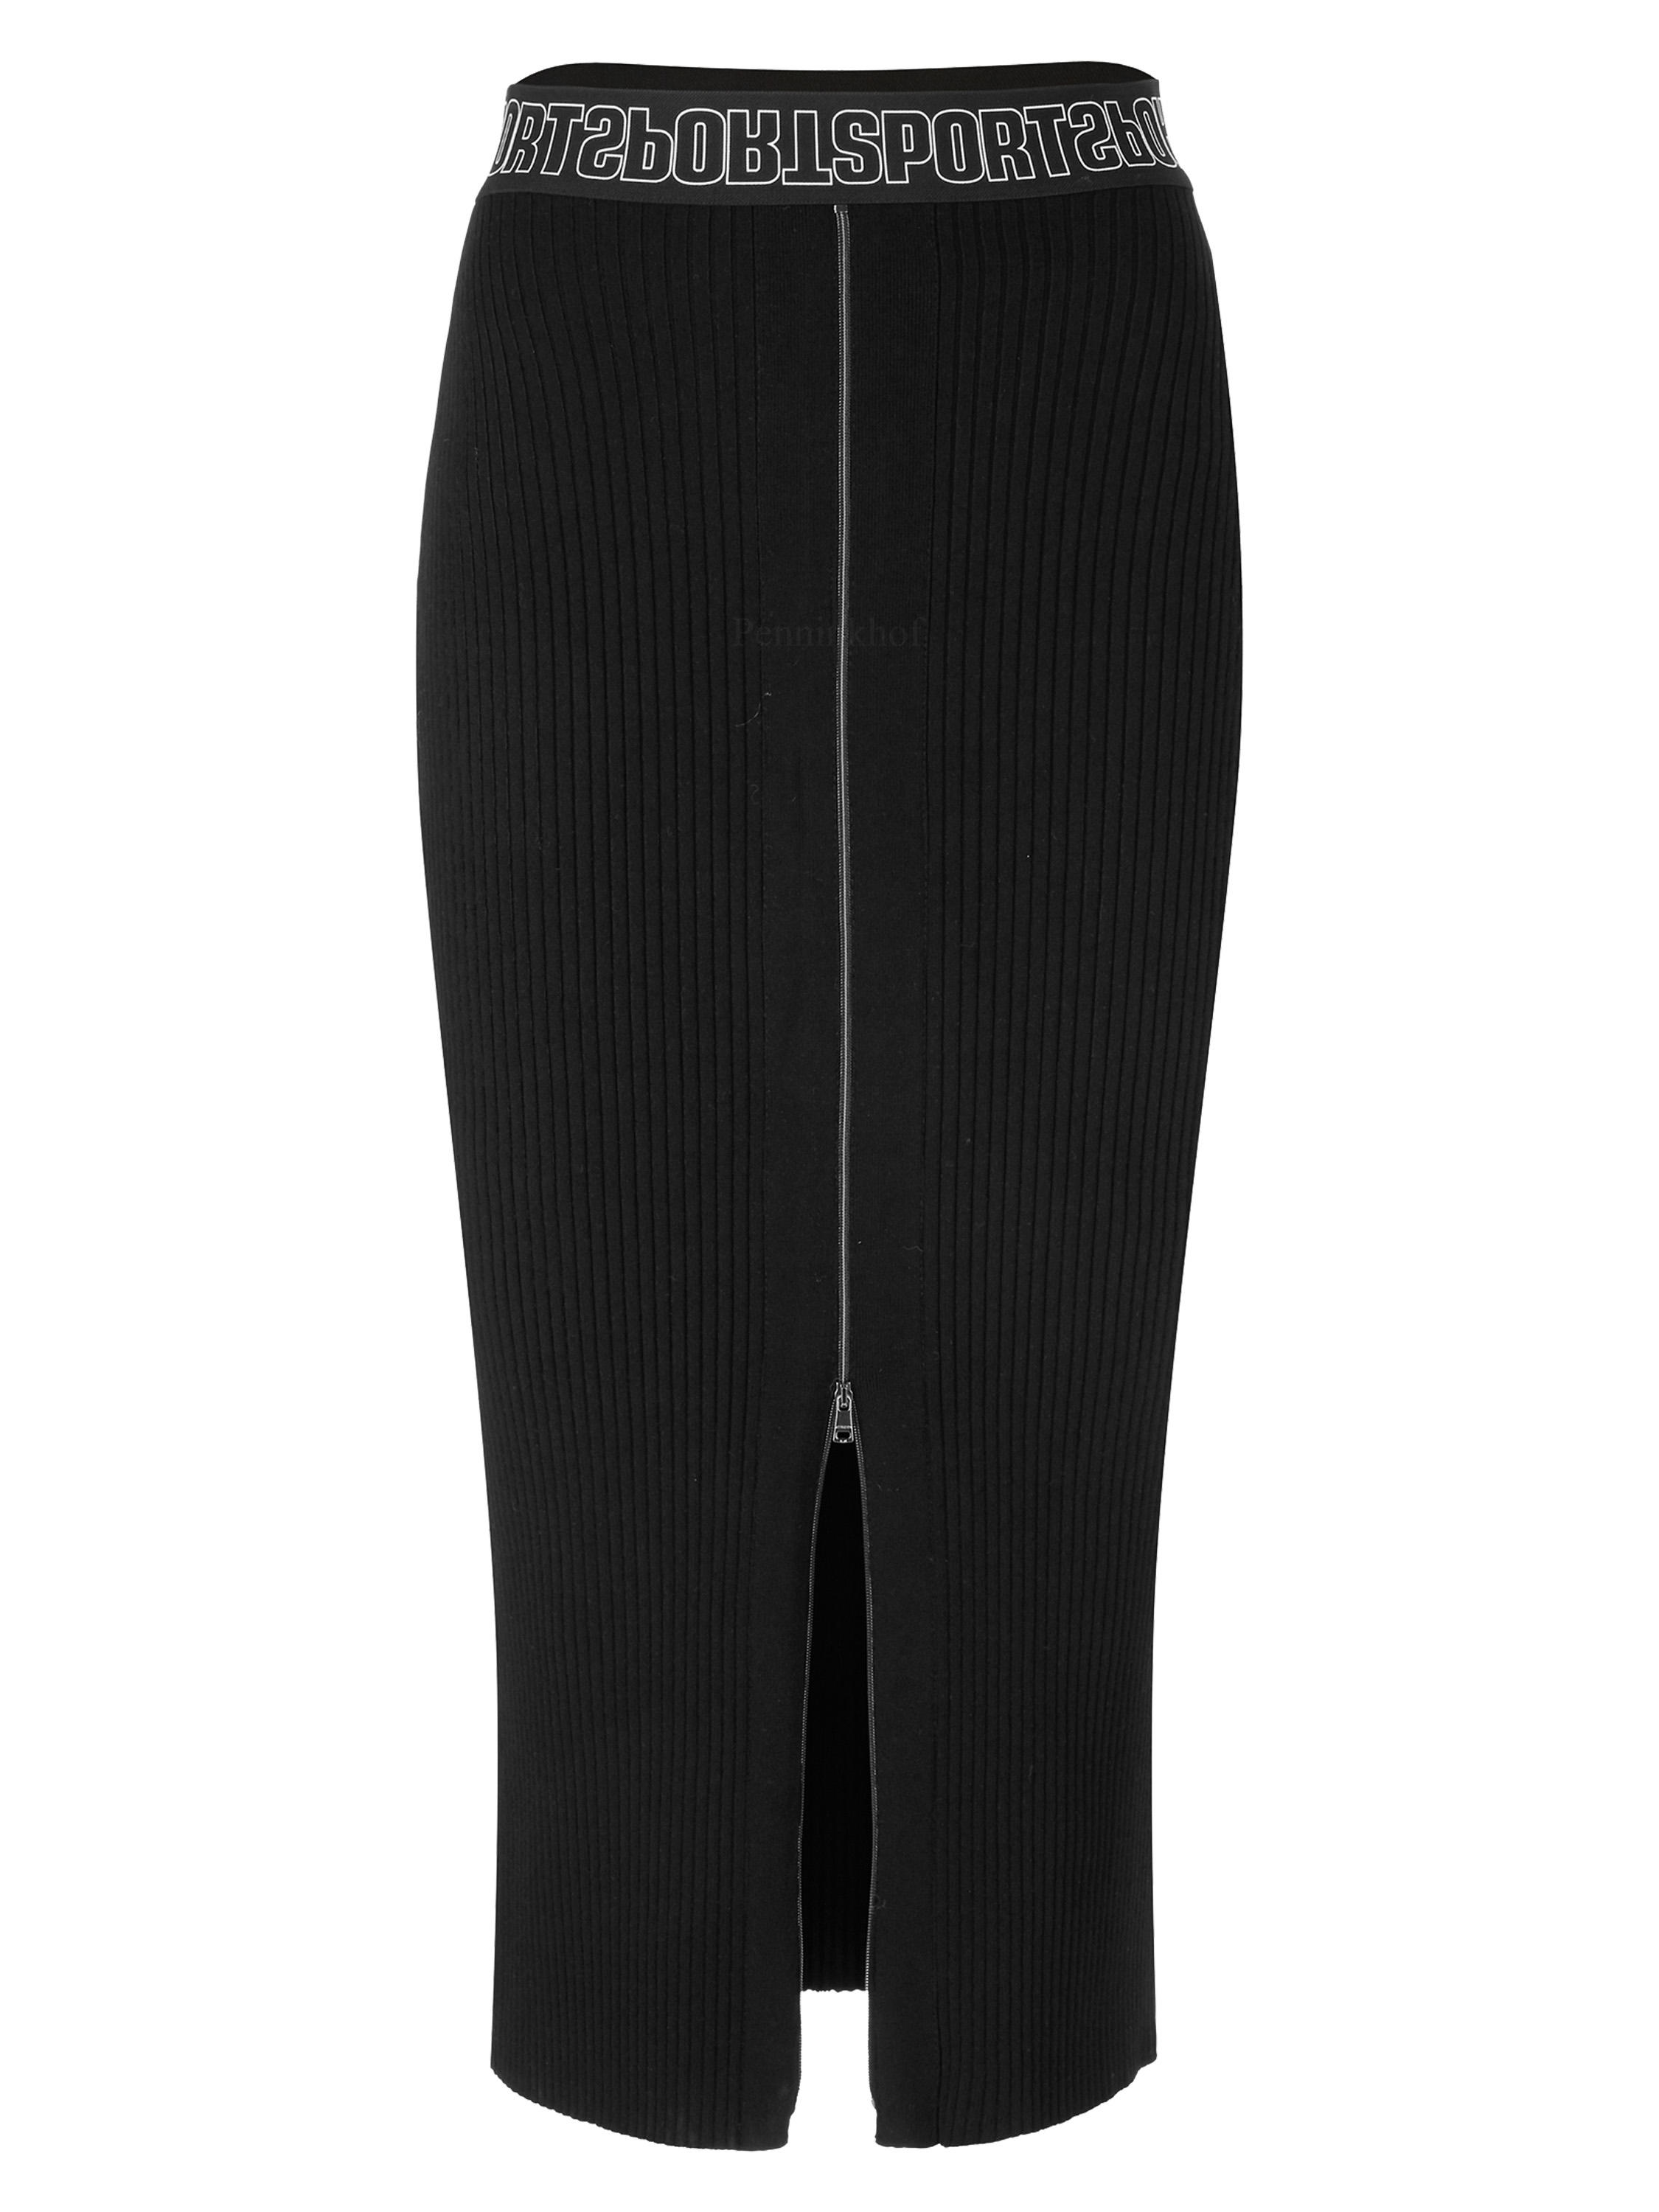 Marc Cain skirts VS 71.14 M09 Black by Penninkhoffashion.com